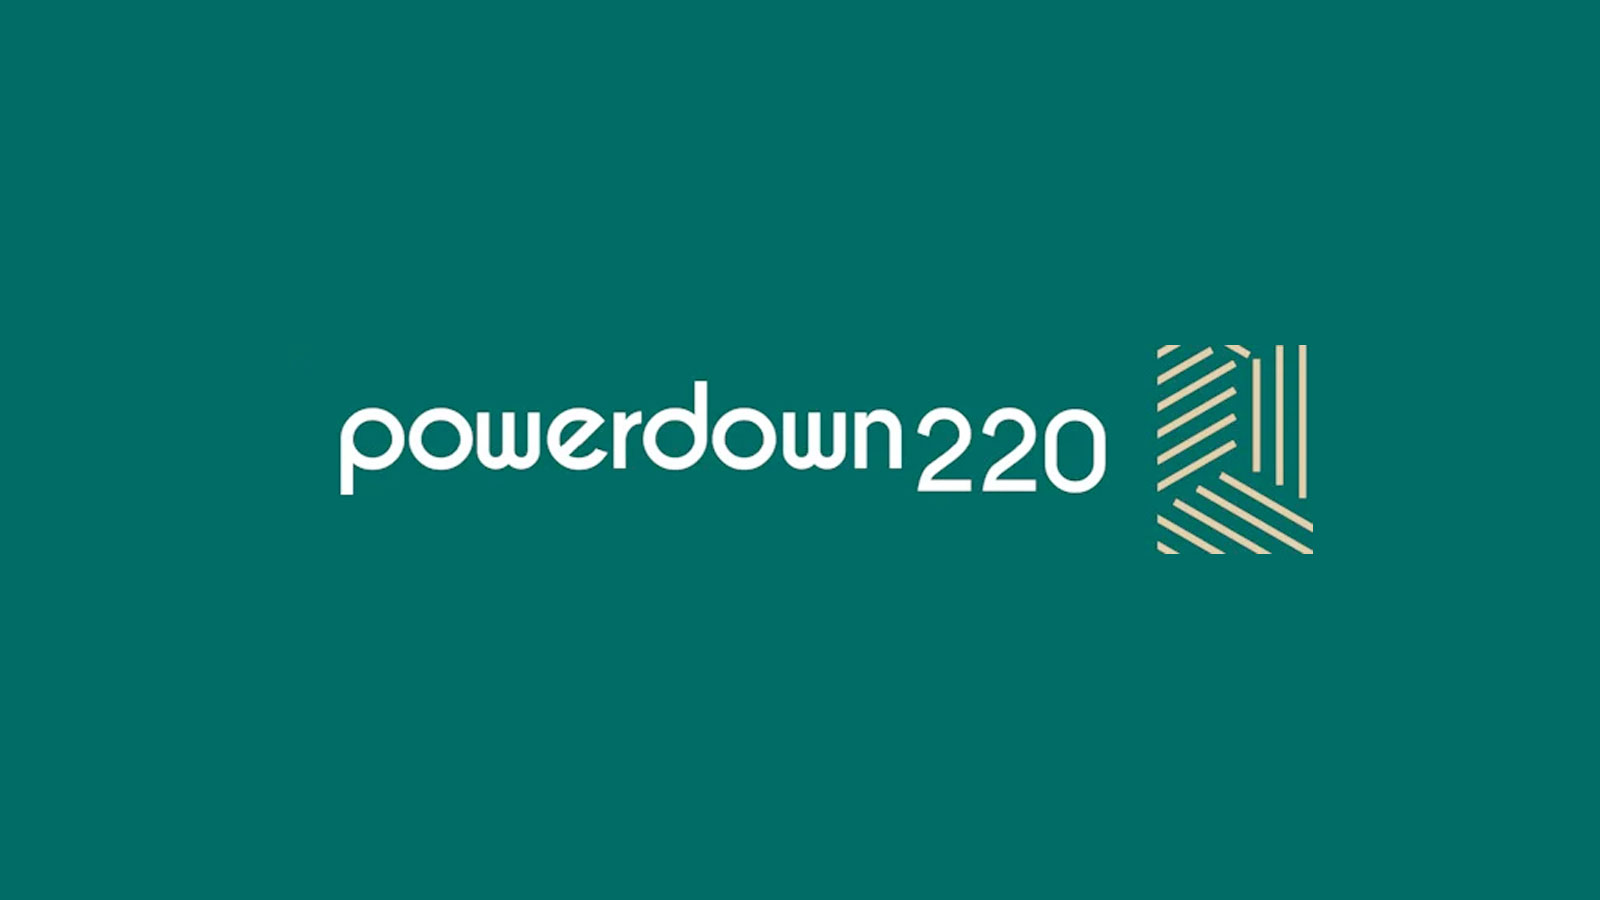 Powerdown220 logo